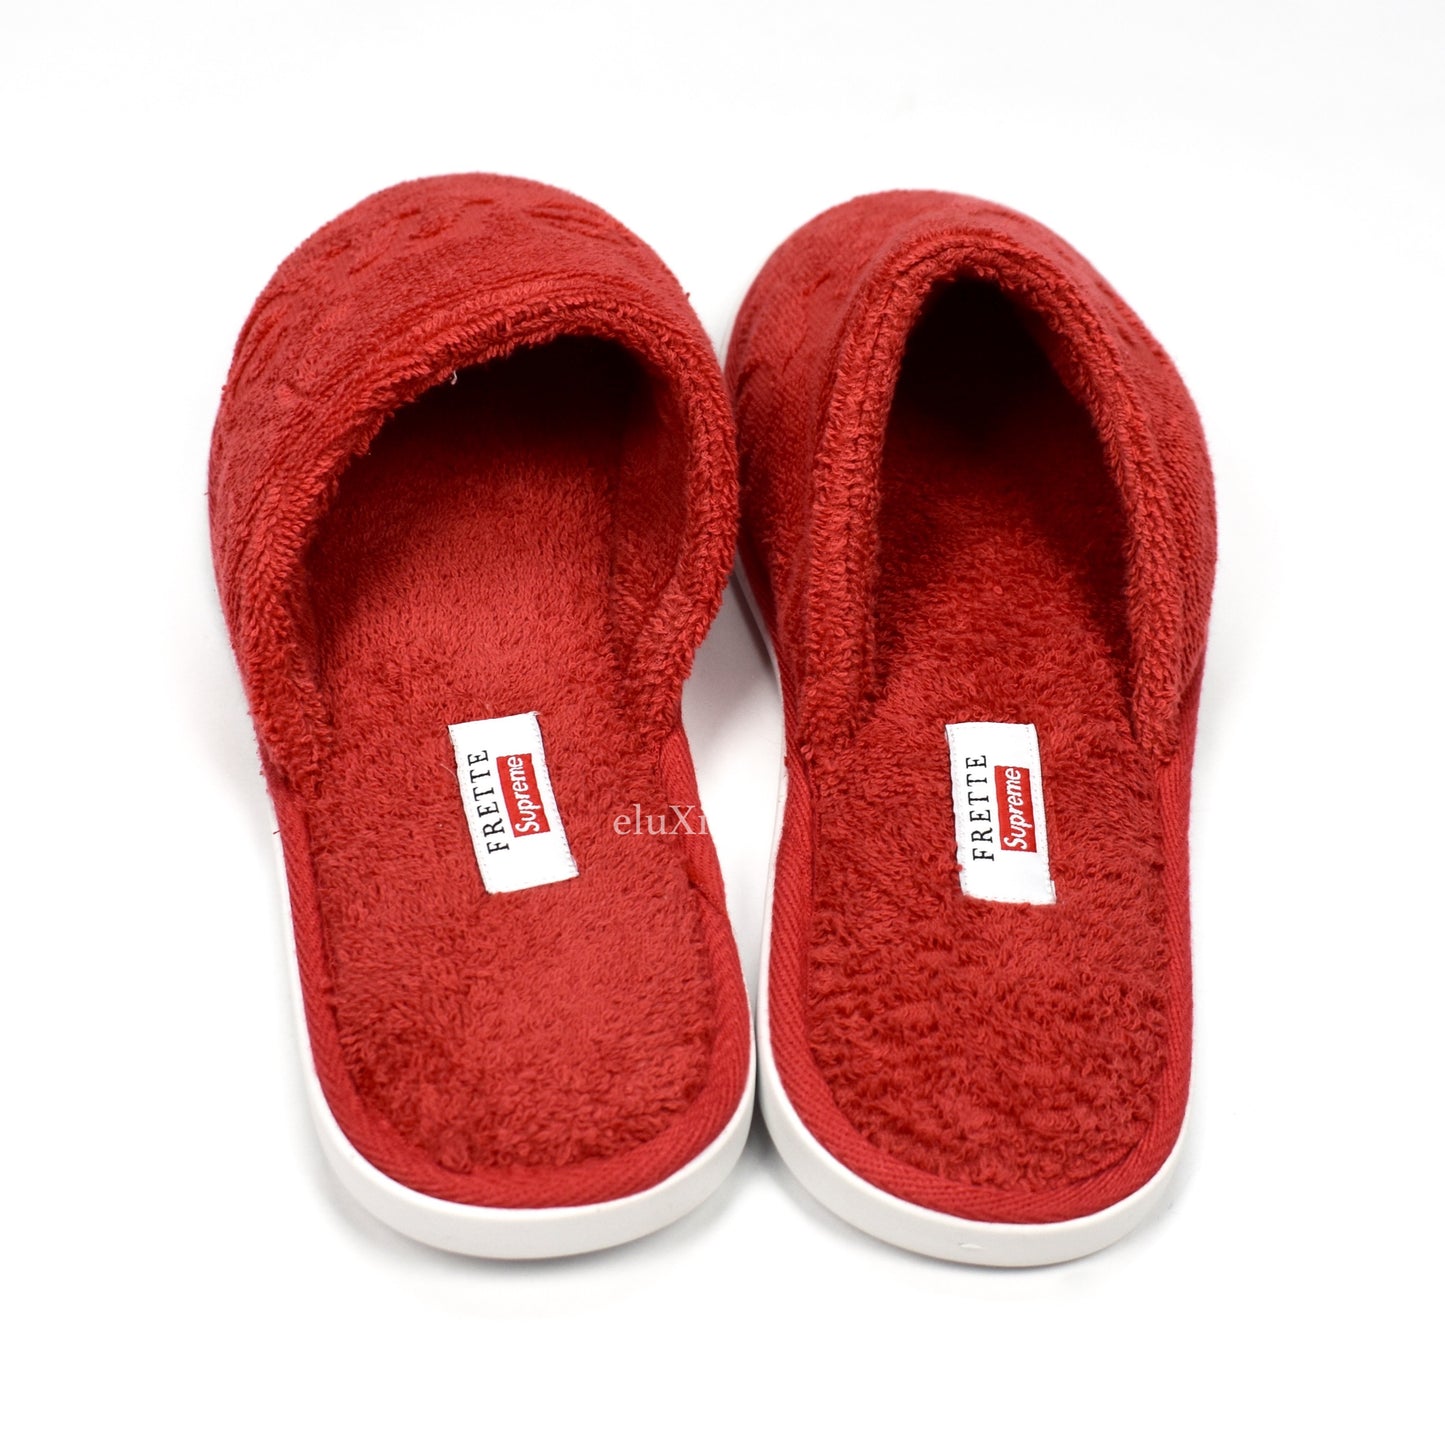 Supreme x Frette - Box Logo Woven Slippers (Red)